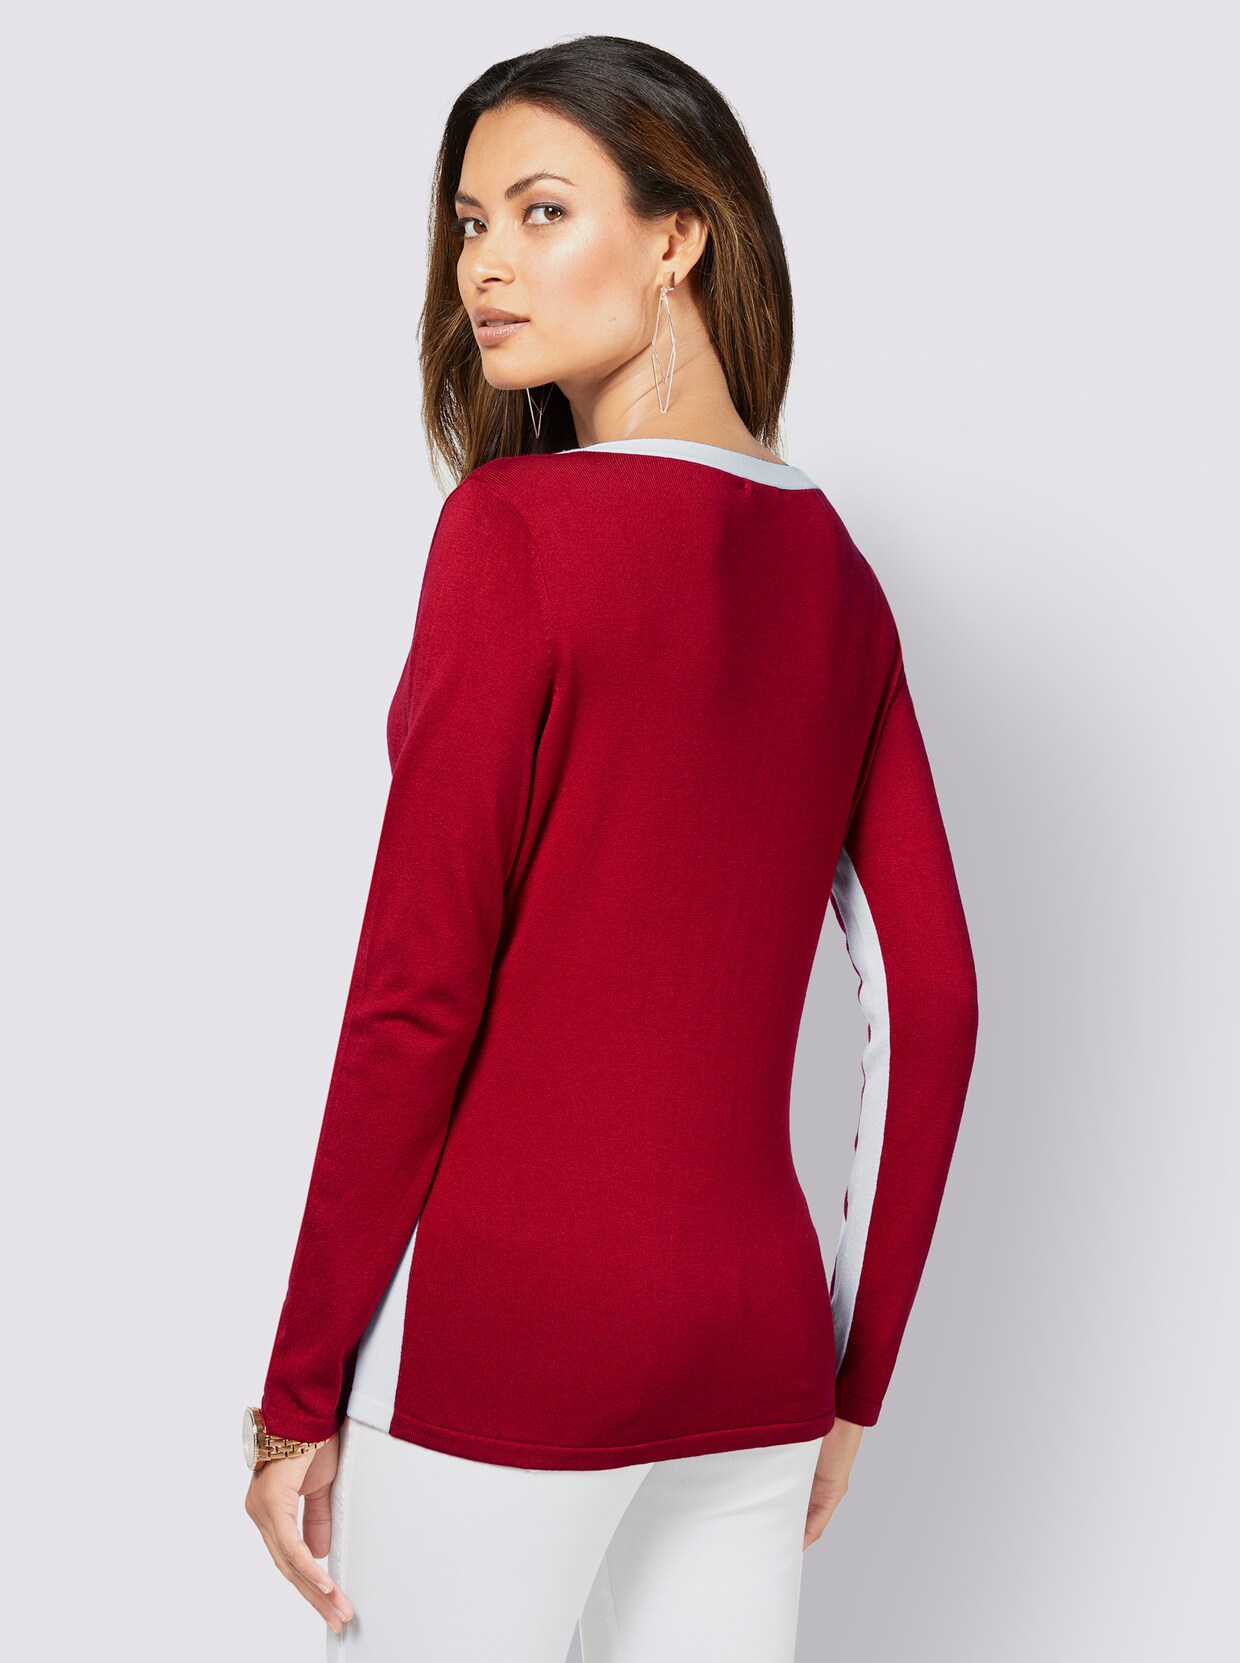 Langarm-Pullover - rot-weiß